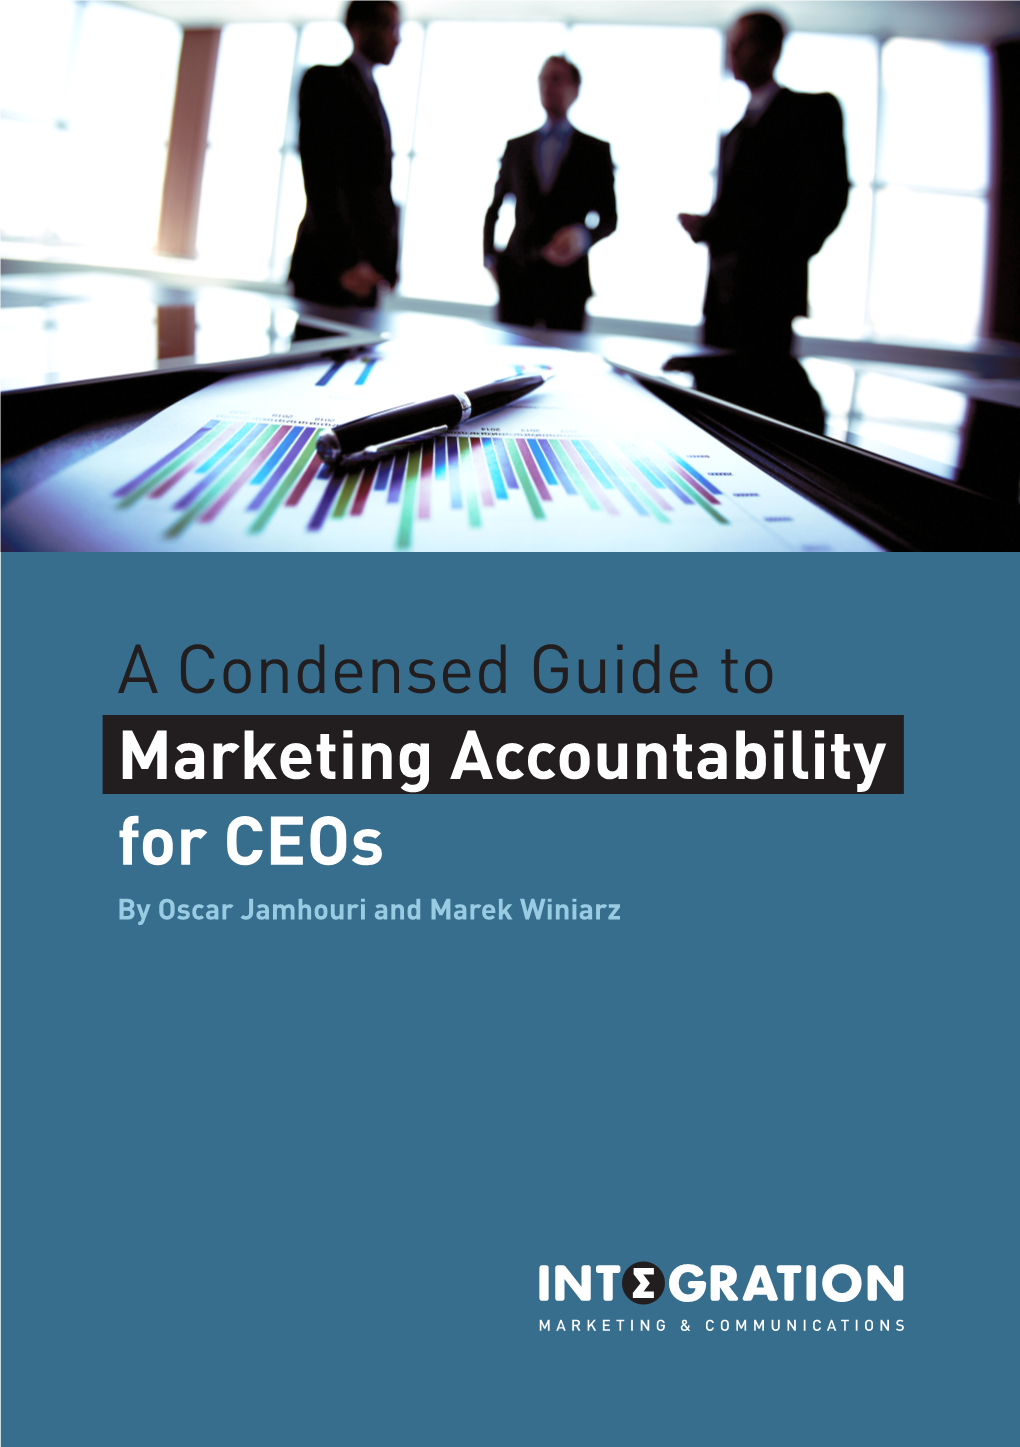 A Condensed Guide to Marketing Accountability for Ceos by Oscar Jamhouri and Marek Winiarz